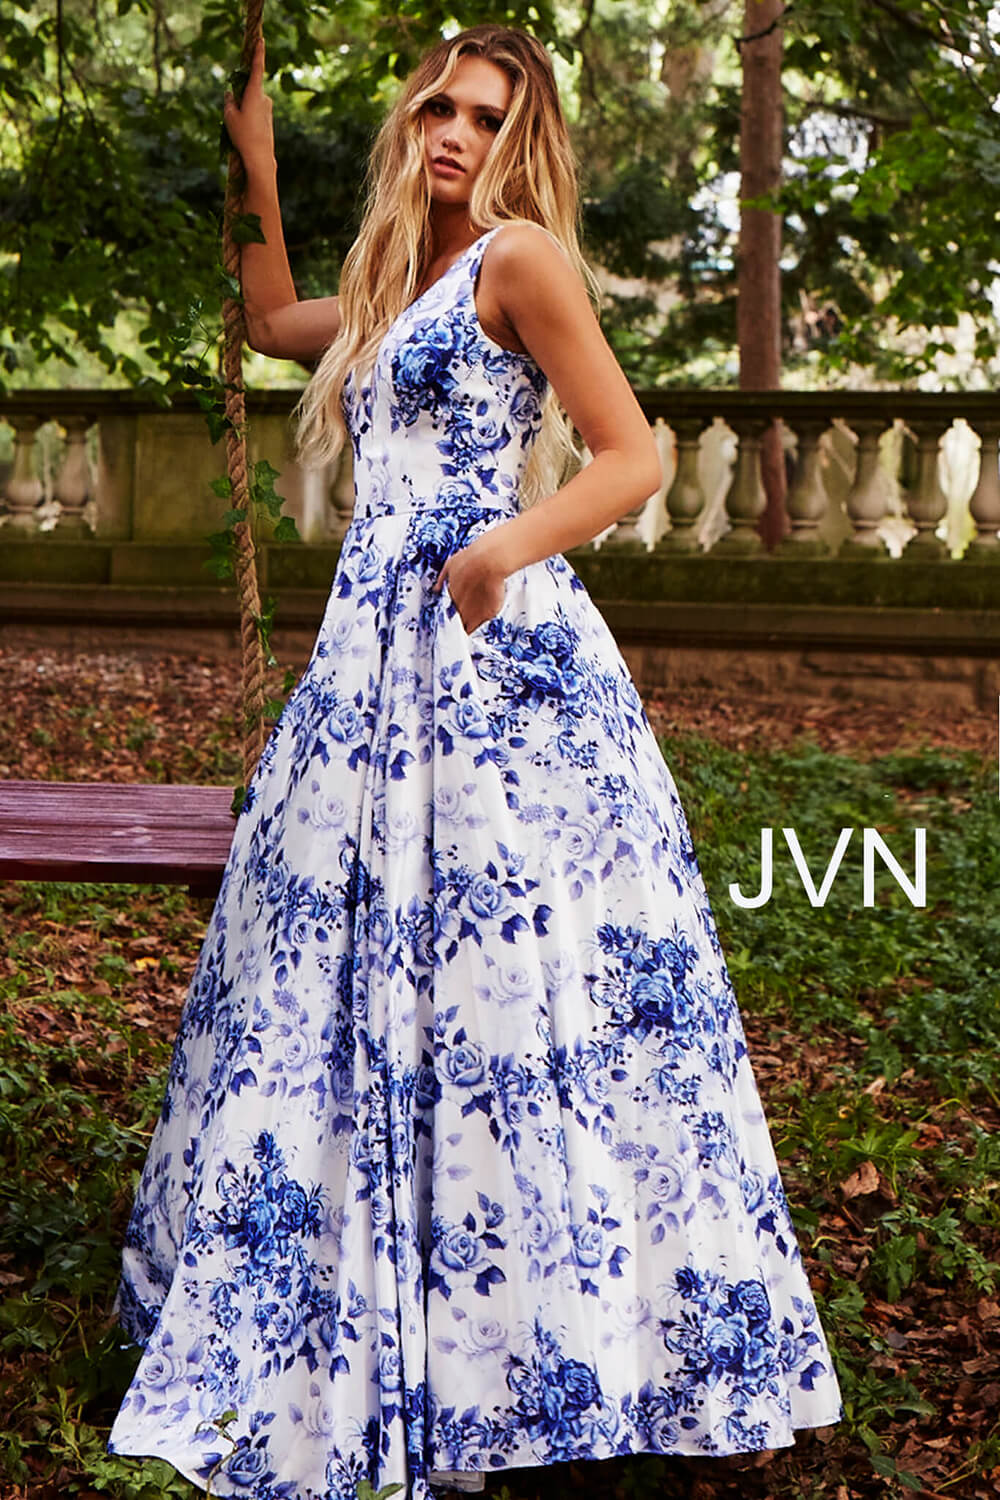 Jovani Blue And White Floral Dress Sale ...